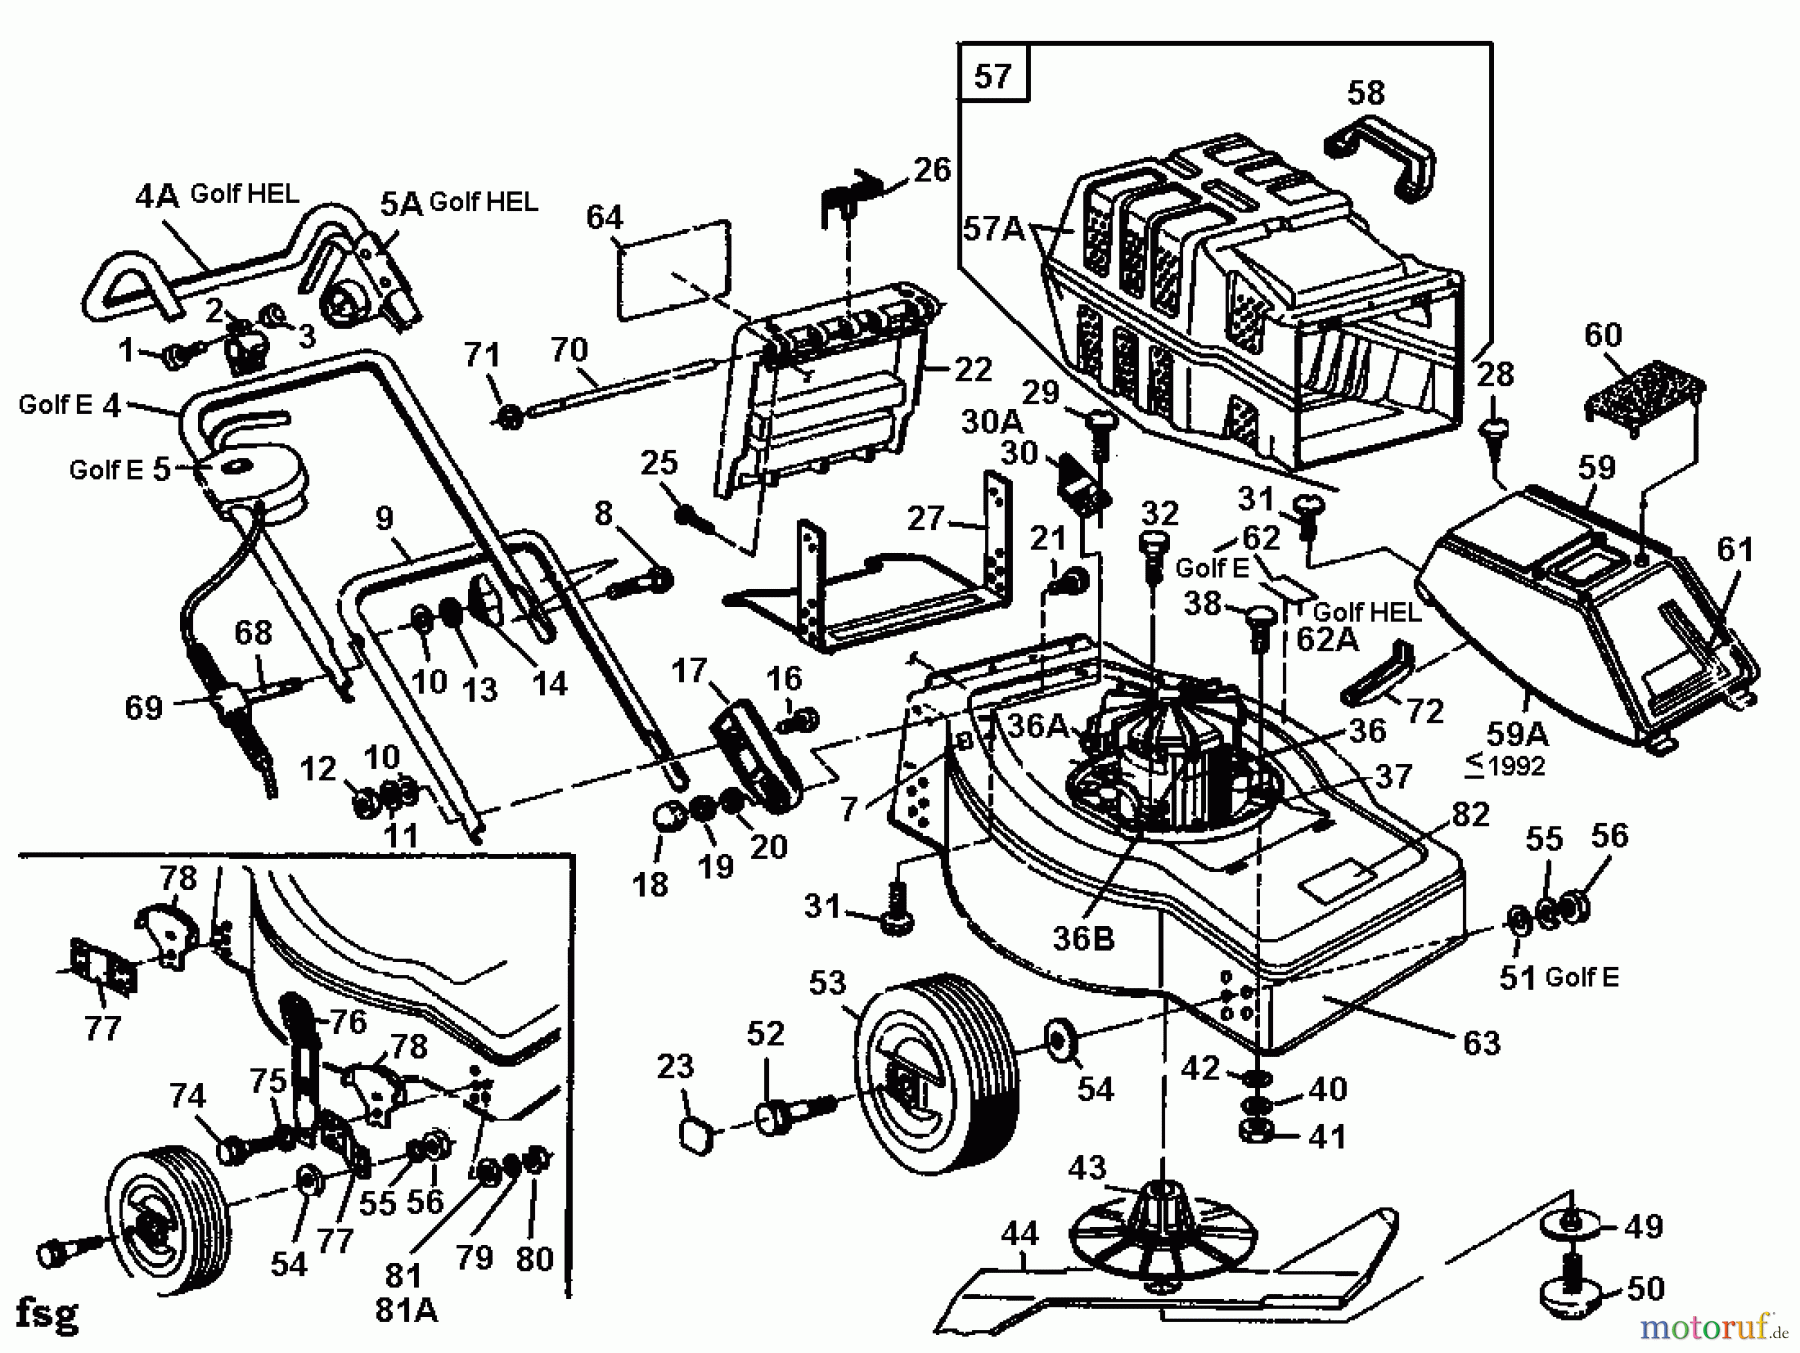  Golf Electric mower Golf HEL 02881.07  (1991) Basic machine